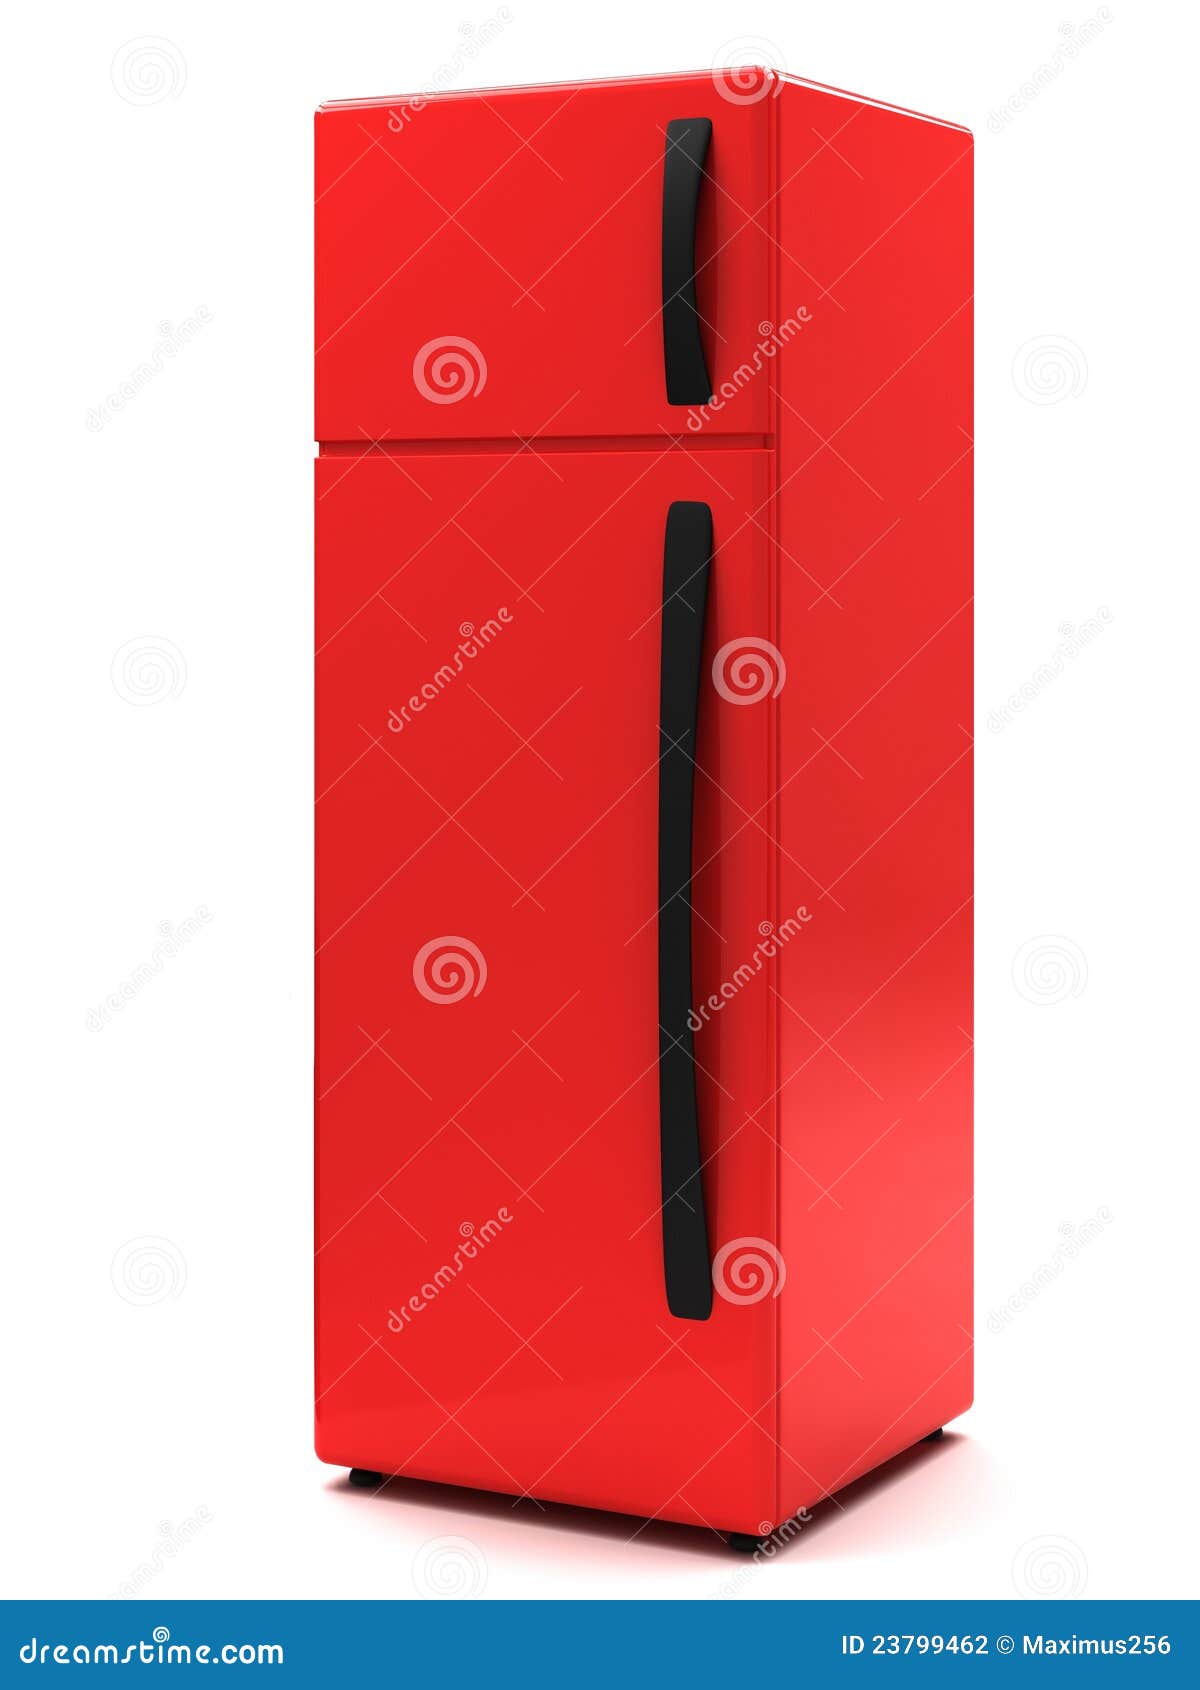 The red refrigerator stock illustration. Illustration of coolness